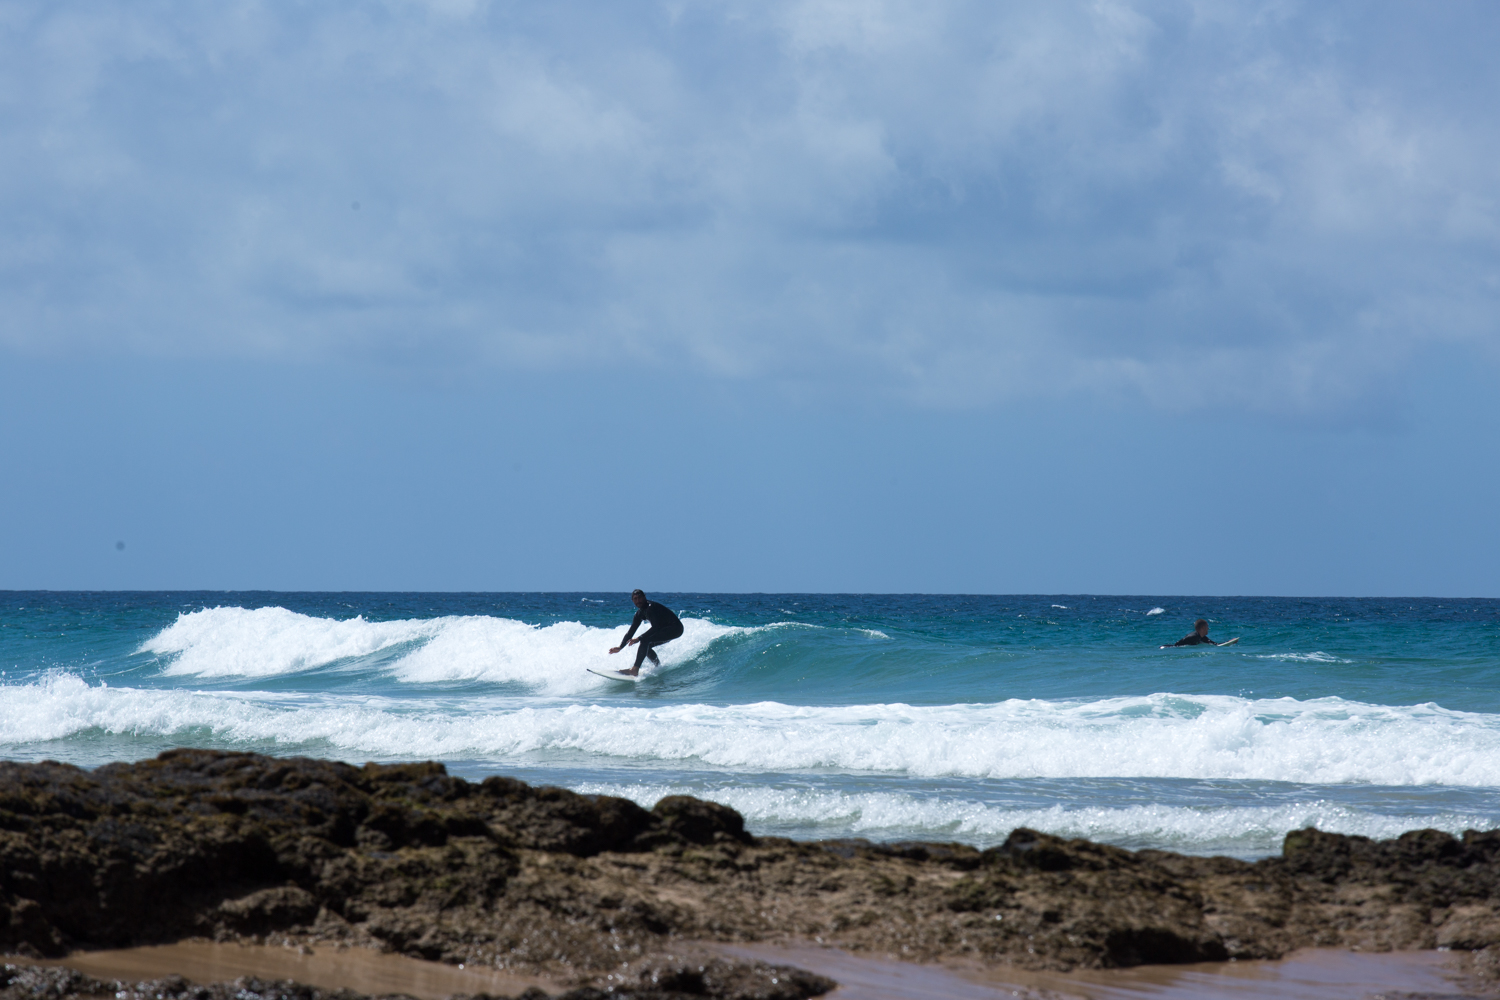 surfer riding a wave at el cotillo surf spot